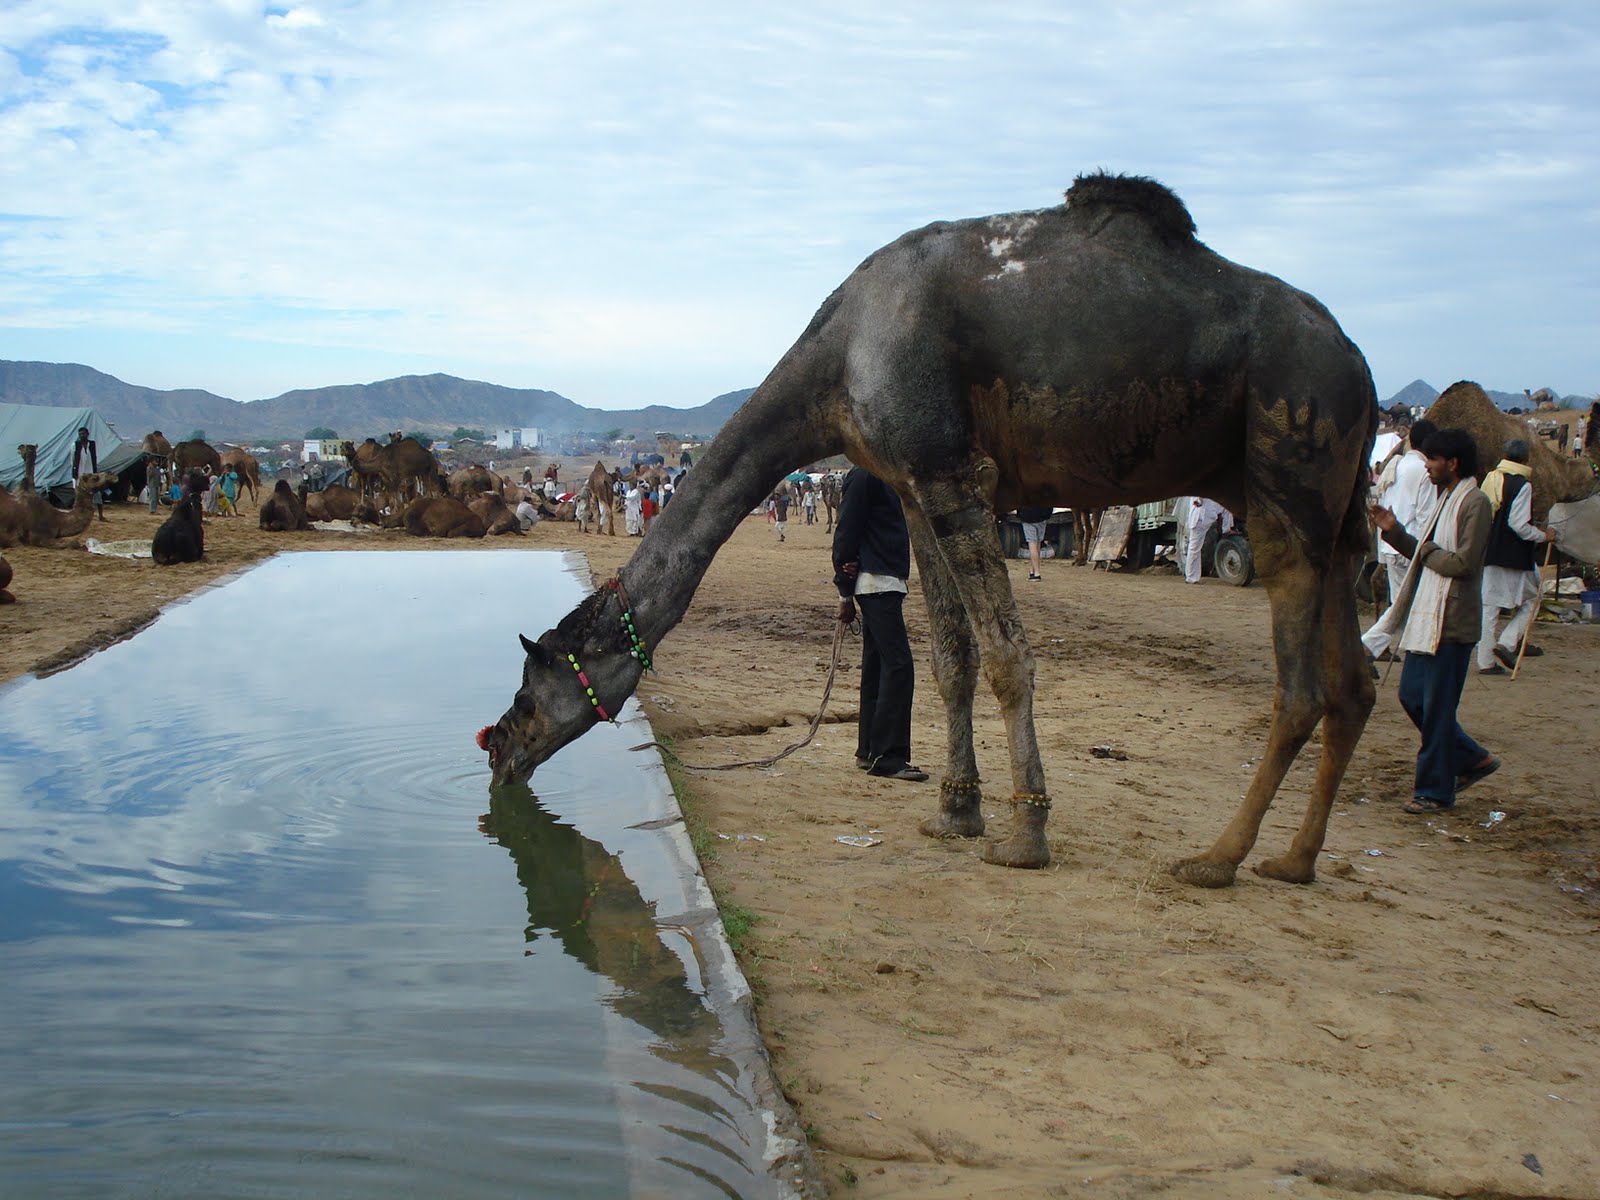 http://4.bp.blogspot.com/-37jzM2rIb2A/Tq5ebmb_v2I/AAAAAAAACls/TD7xHOkkpsg/s1600/camel-drinking-water.JPG